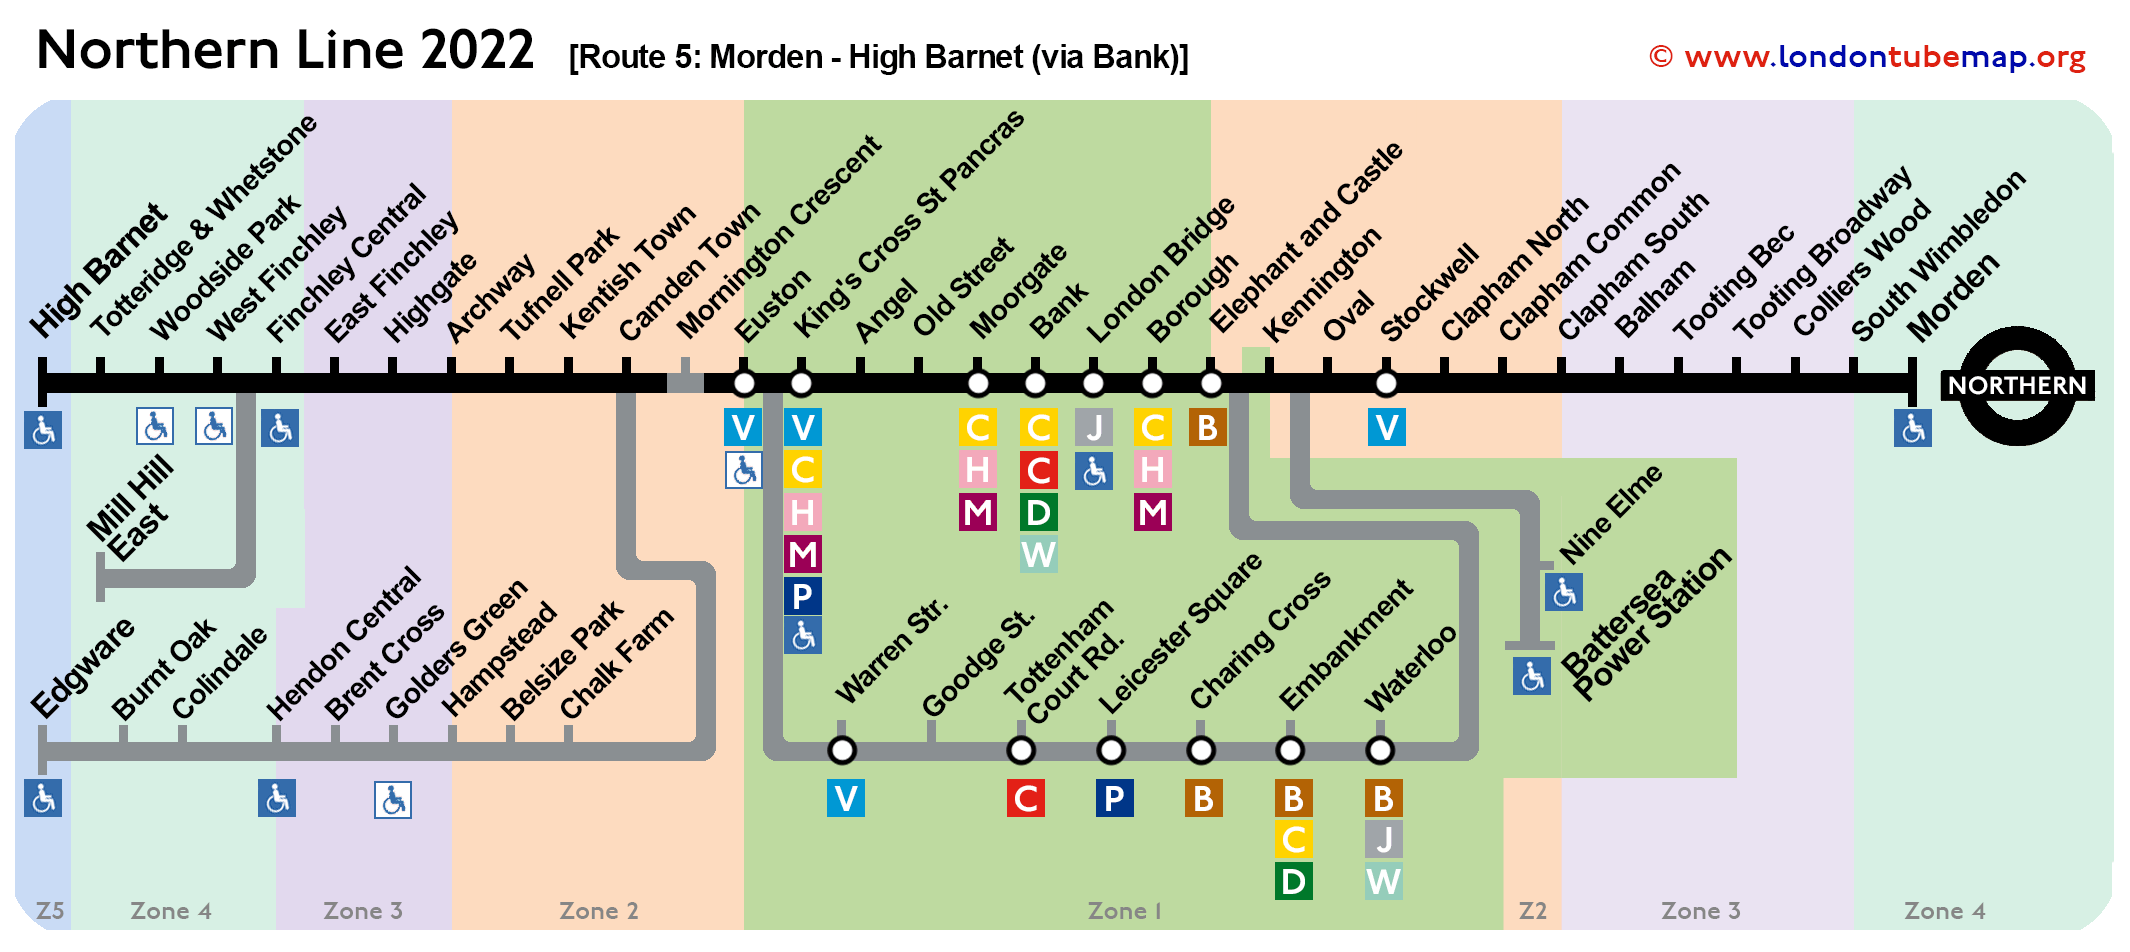 Northern line map 2022 Route-5 Morden High Barnet via Bank